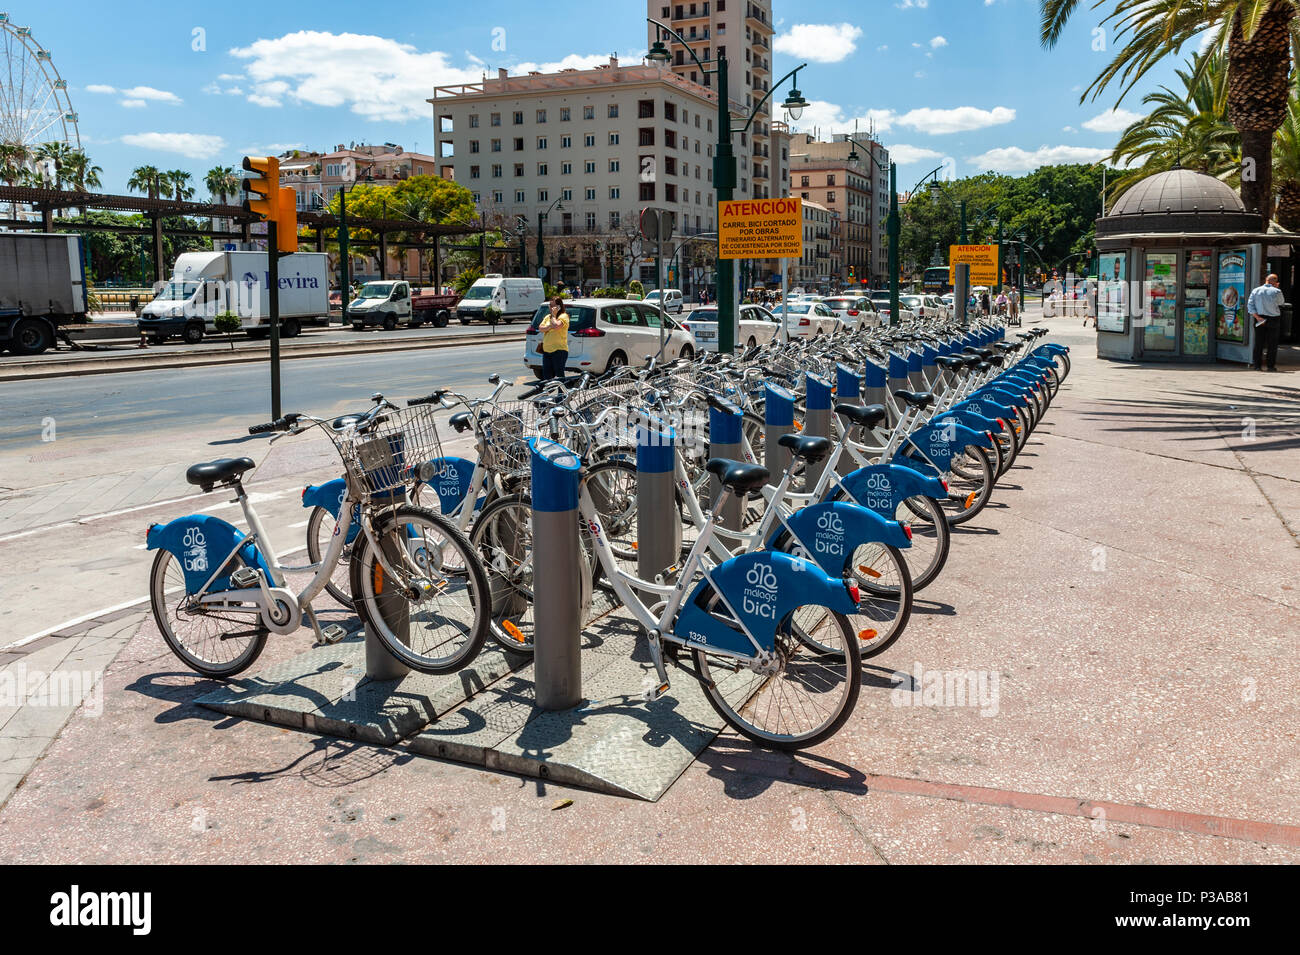 Lignes de partage public Bici, Malaga, Location de vélos à la gare de Malaga, en Espagne. Banque D'Images